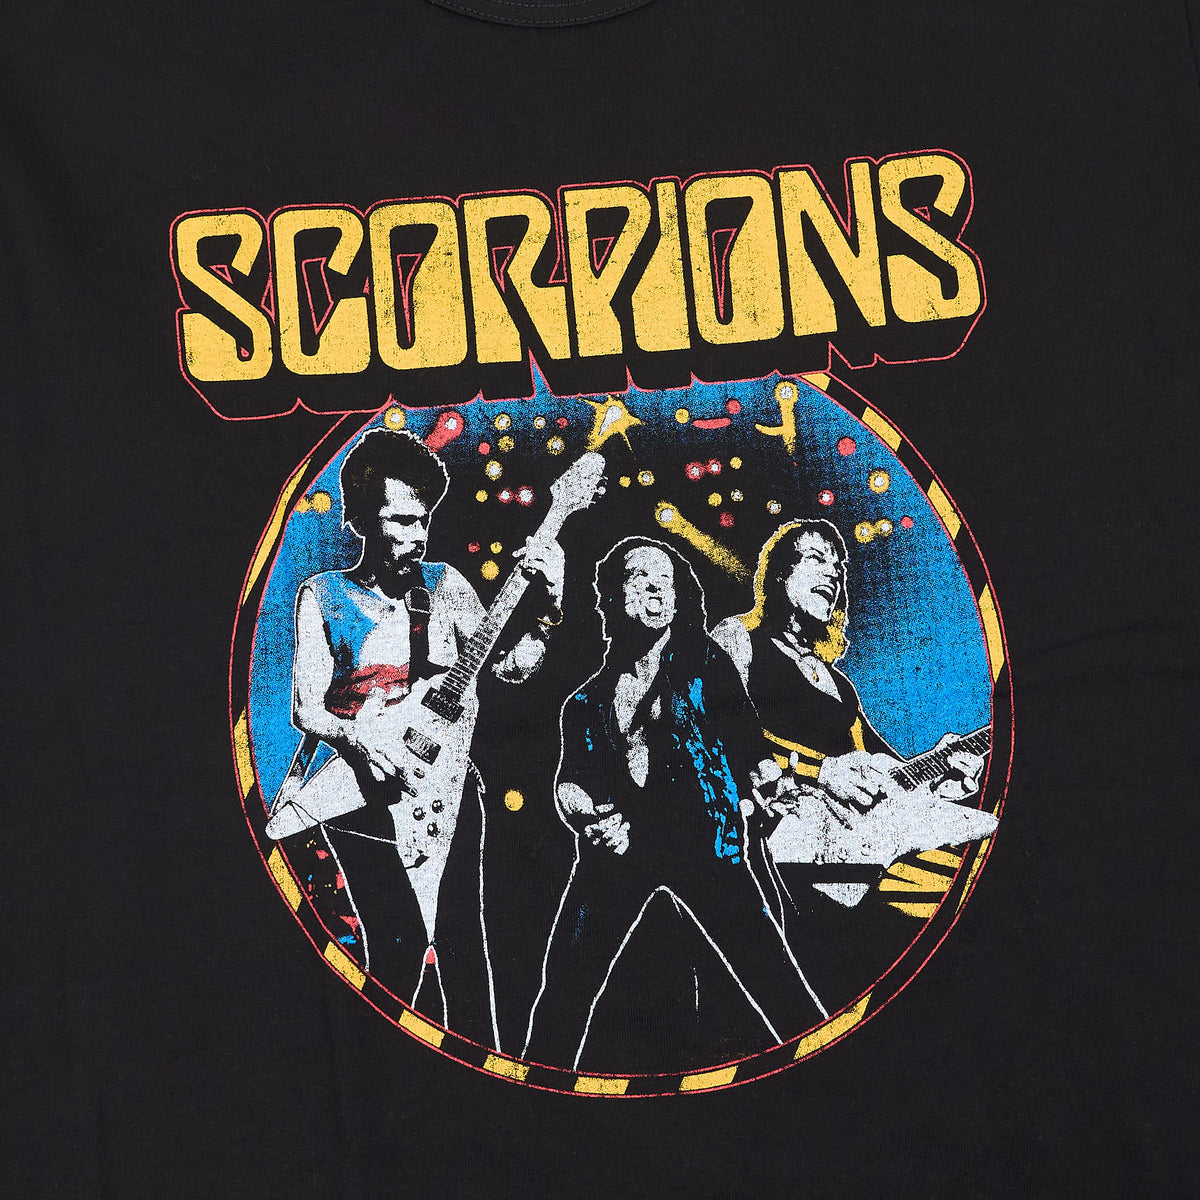 Junya Watanbe Man Scorpions Heavy Weight T-Shirt